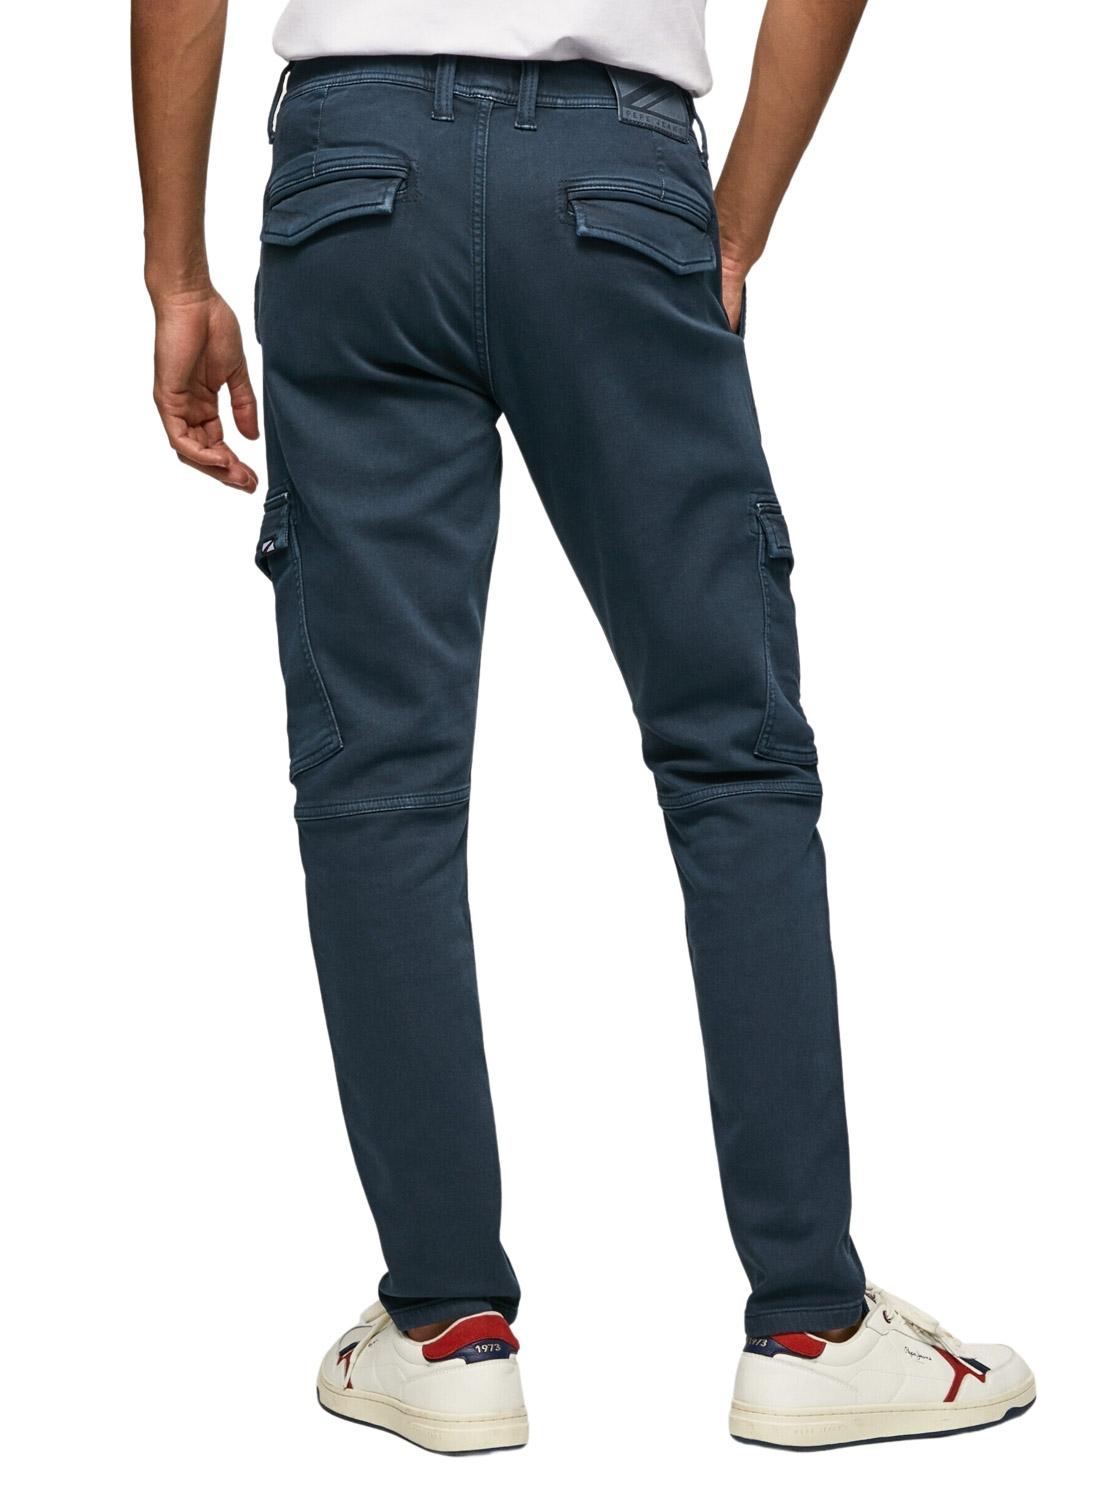 Pantaloni Pepe Jeans Jared Blu Navy per Uomo